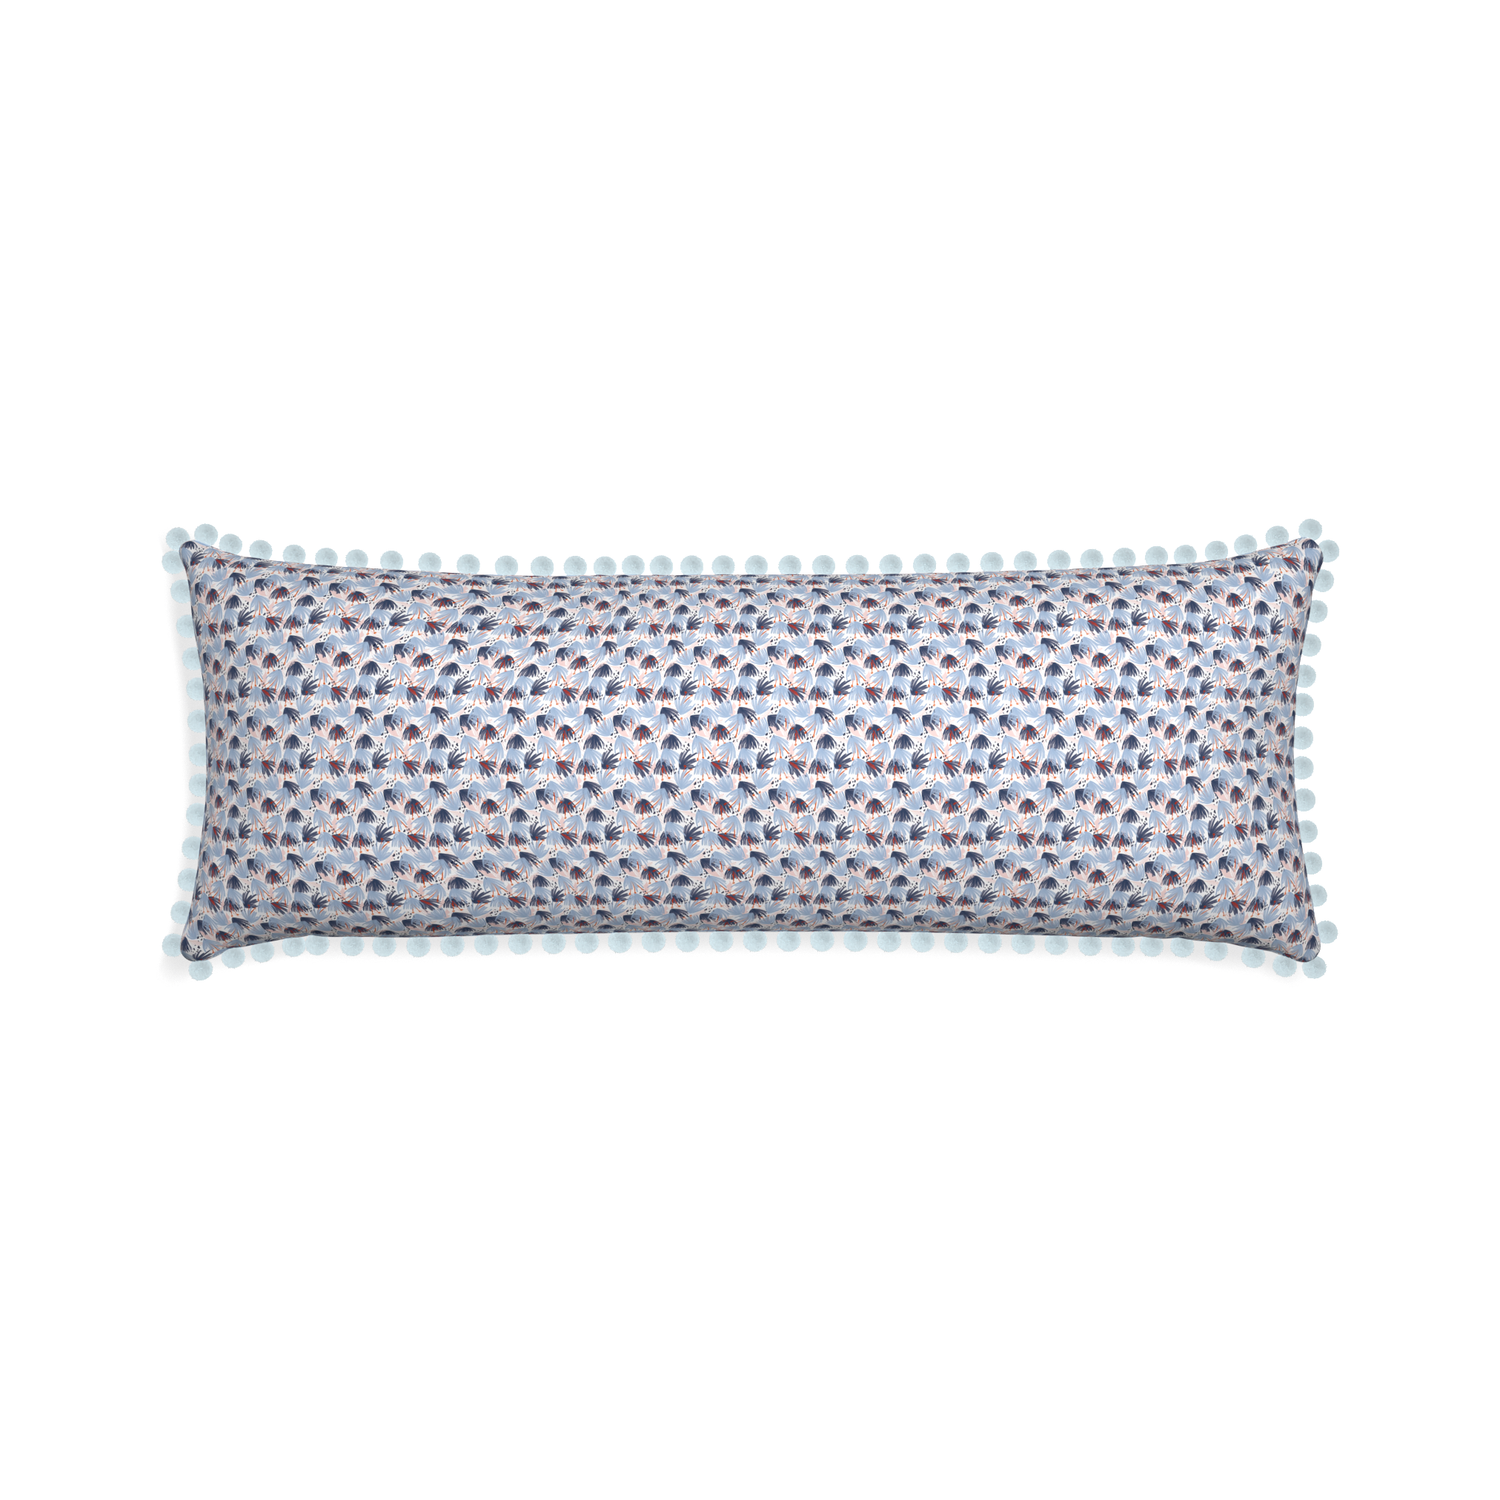 Xl-lumbar eden blue custom pillow with powder pom pom on white background